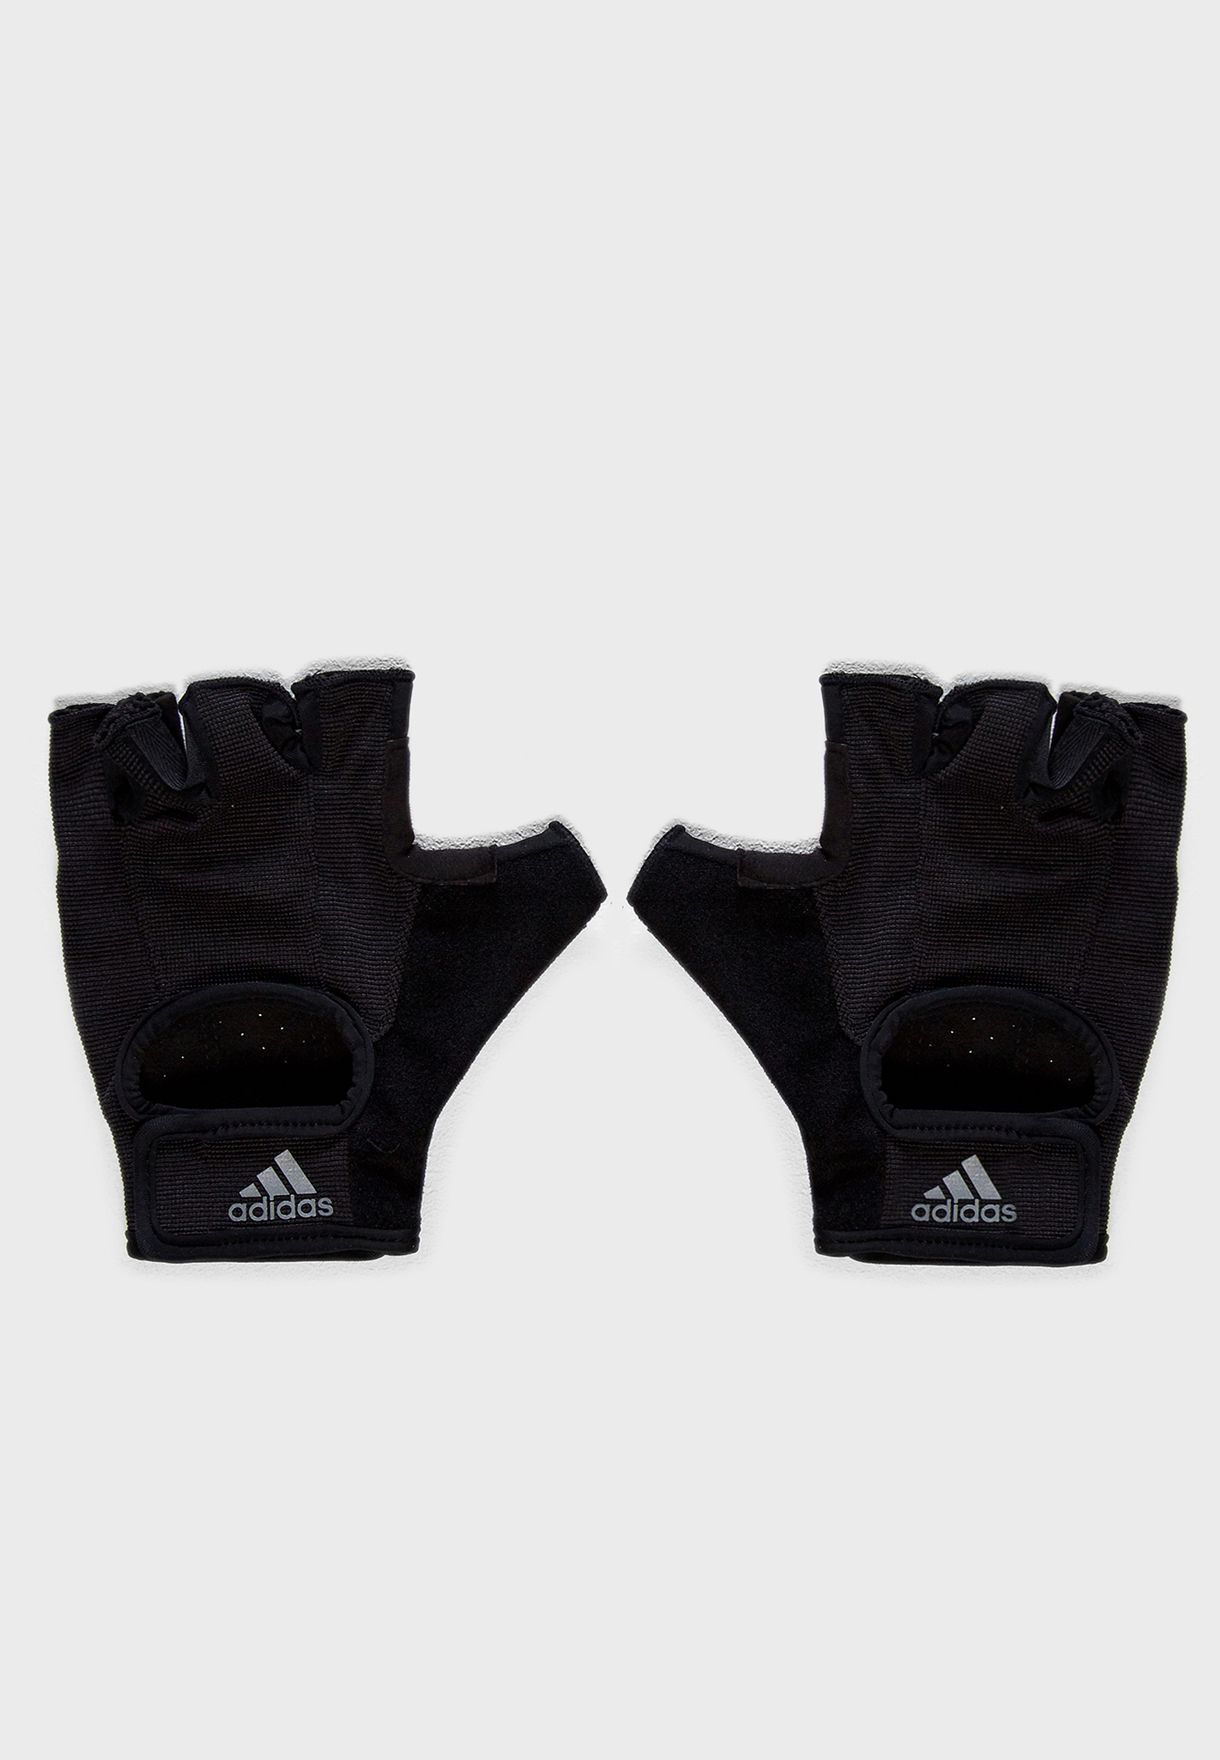 adidas climalite gloves